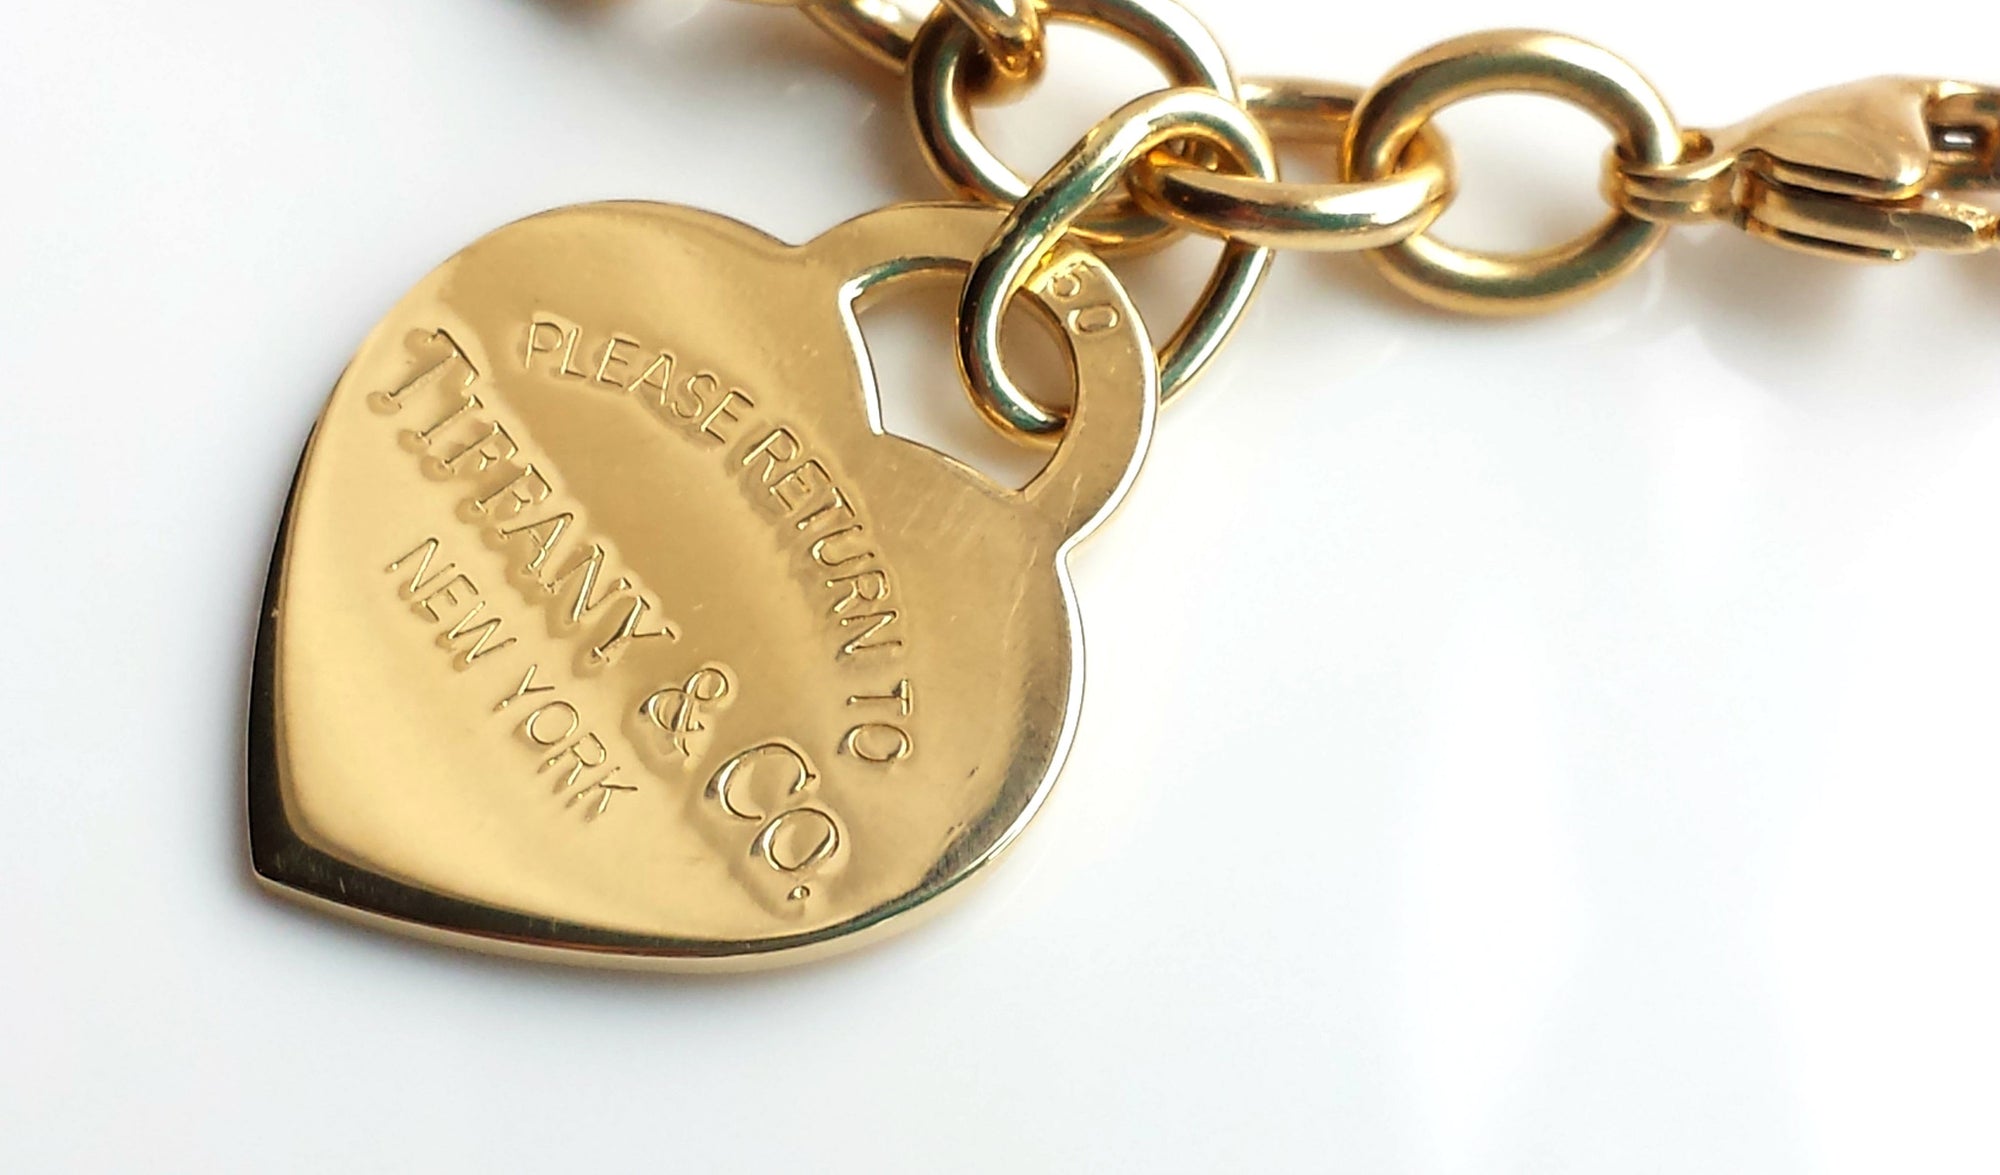 Tiffany & Co Return to Tiffany Heart Padlock Necklace Pendant Chain Gift  Love